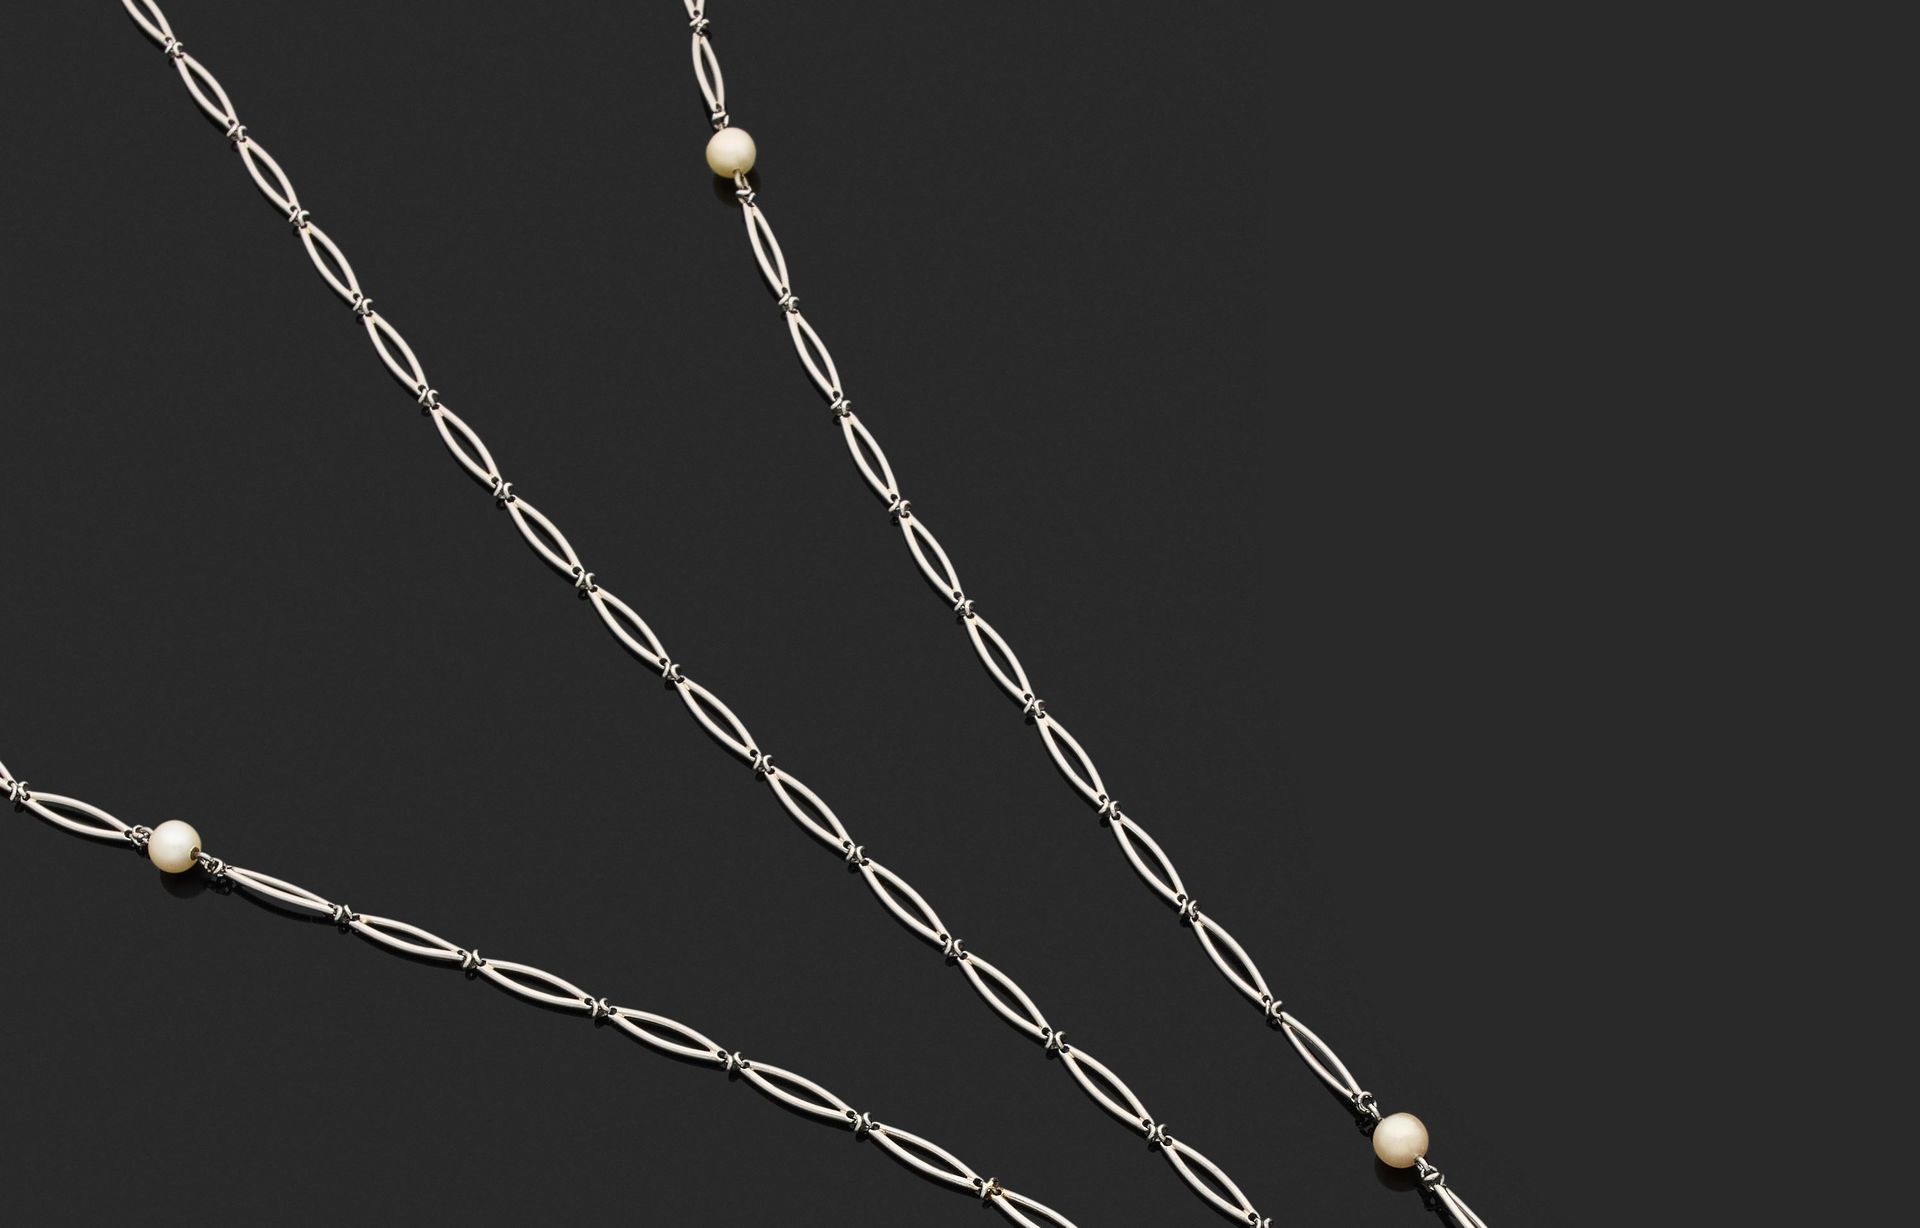 Null 铰链式长项链 

铂金850千分之一，修长的镂空链节上部分镶嵌着小的养殖珍珠。

长度为120厘米。
毛重38.1克。
(有修复和磨损的痕迹)

装在&hellip;